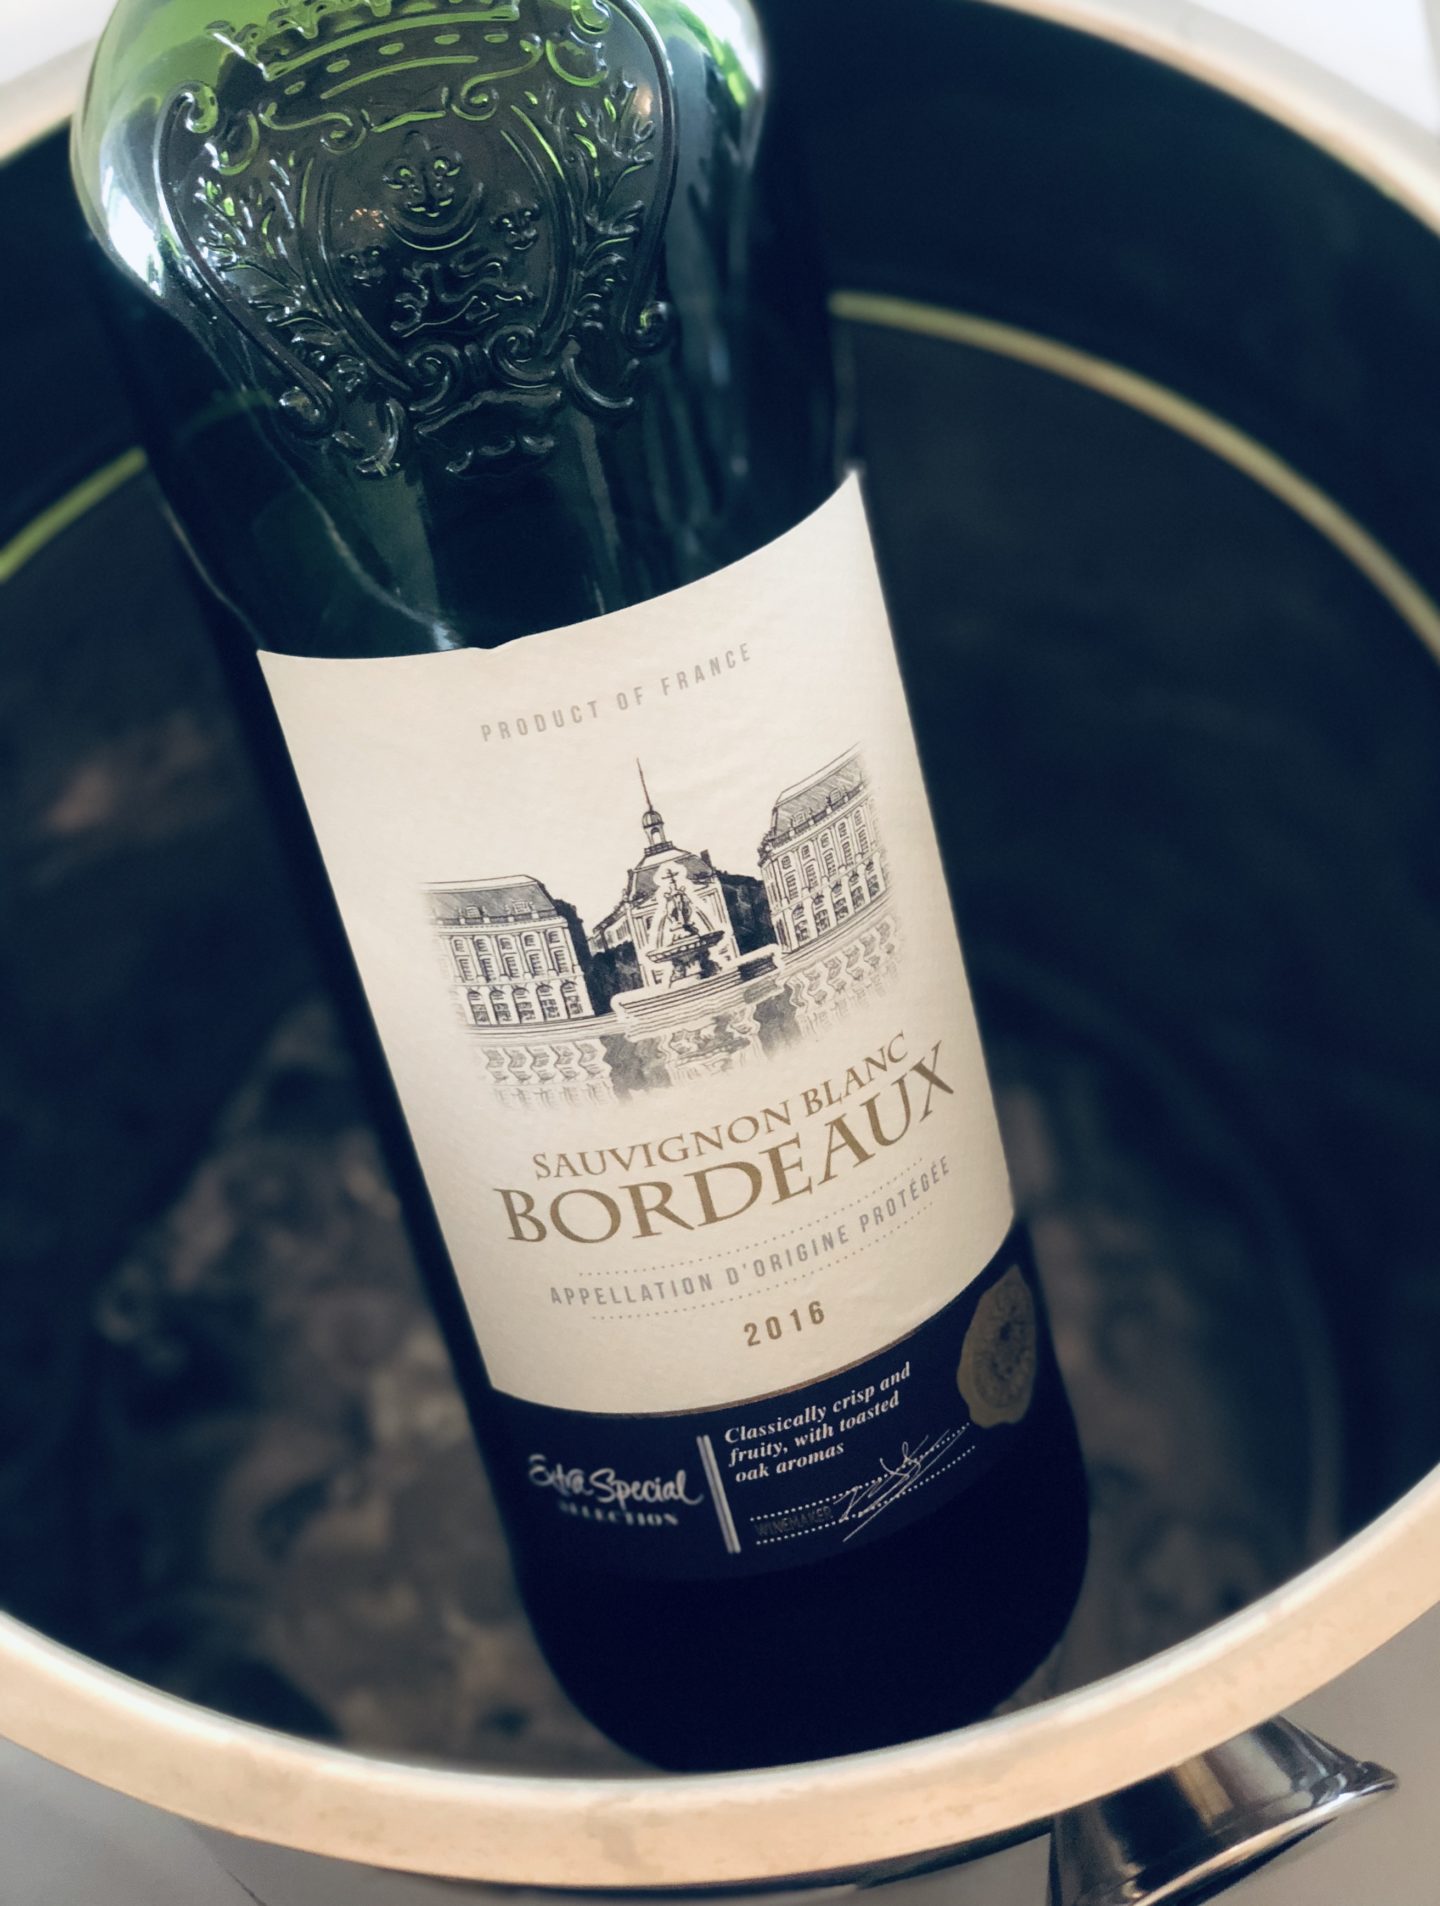 wines for winter with Asda : Sauvignon Blanc Bordeaux